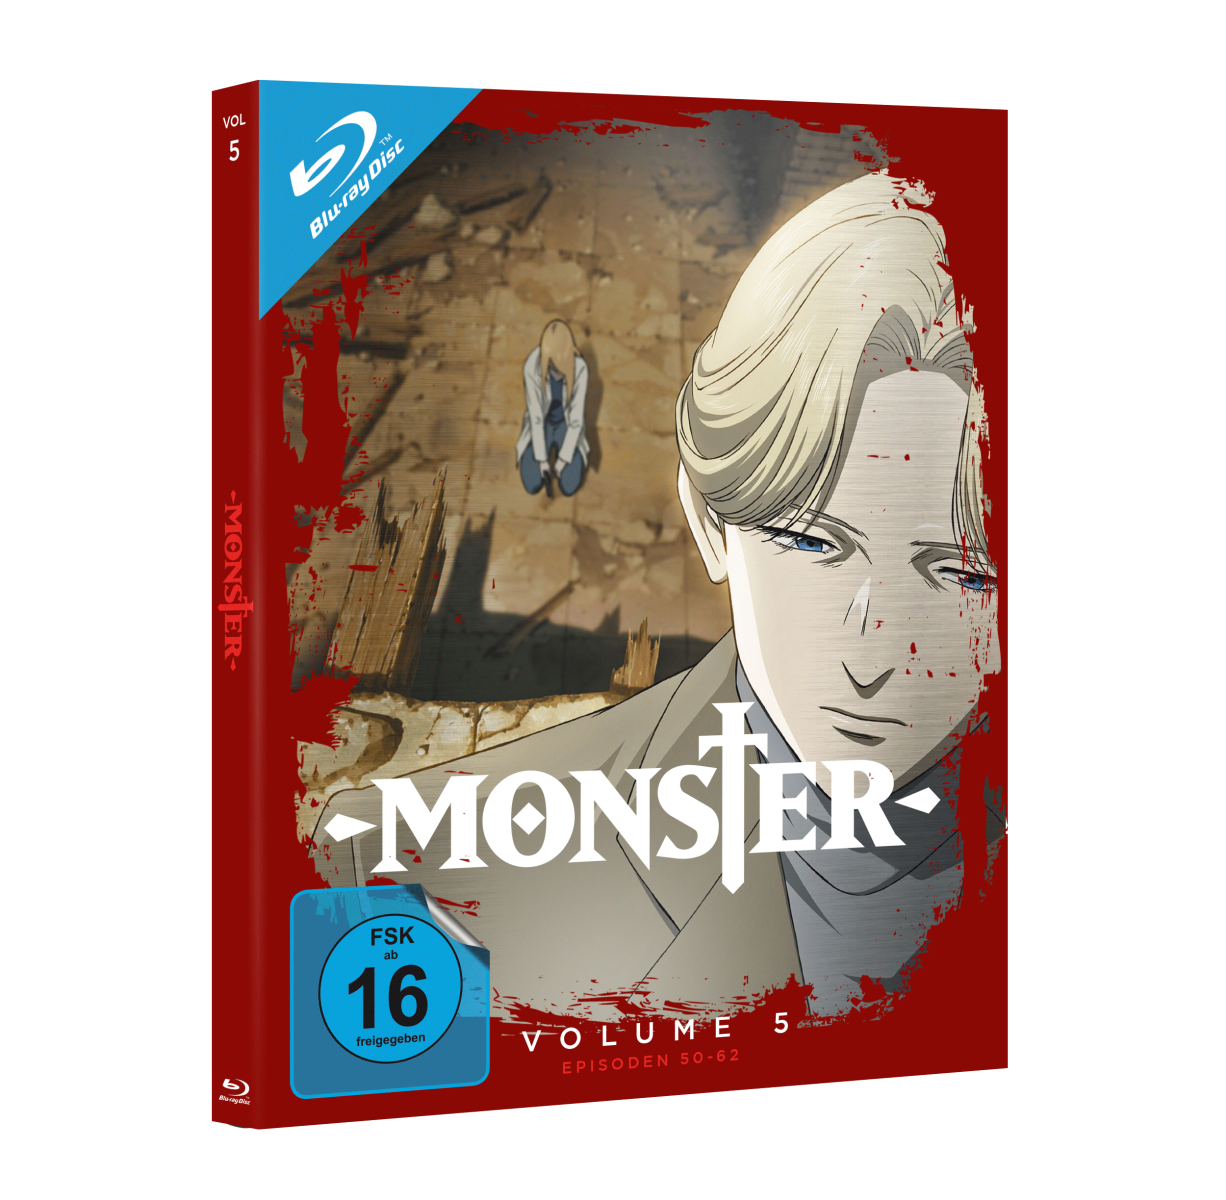 MONSTER - Volume 5: Episode 50-62 im Steelbook [Blu-ray] Image 2